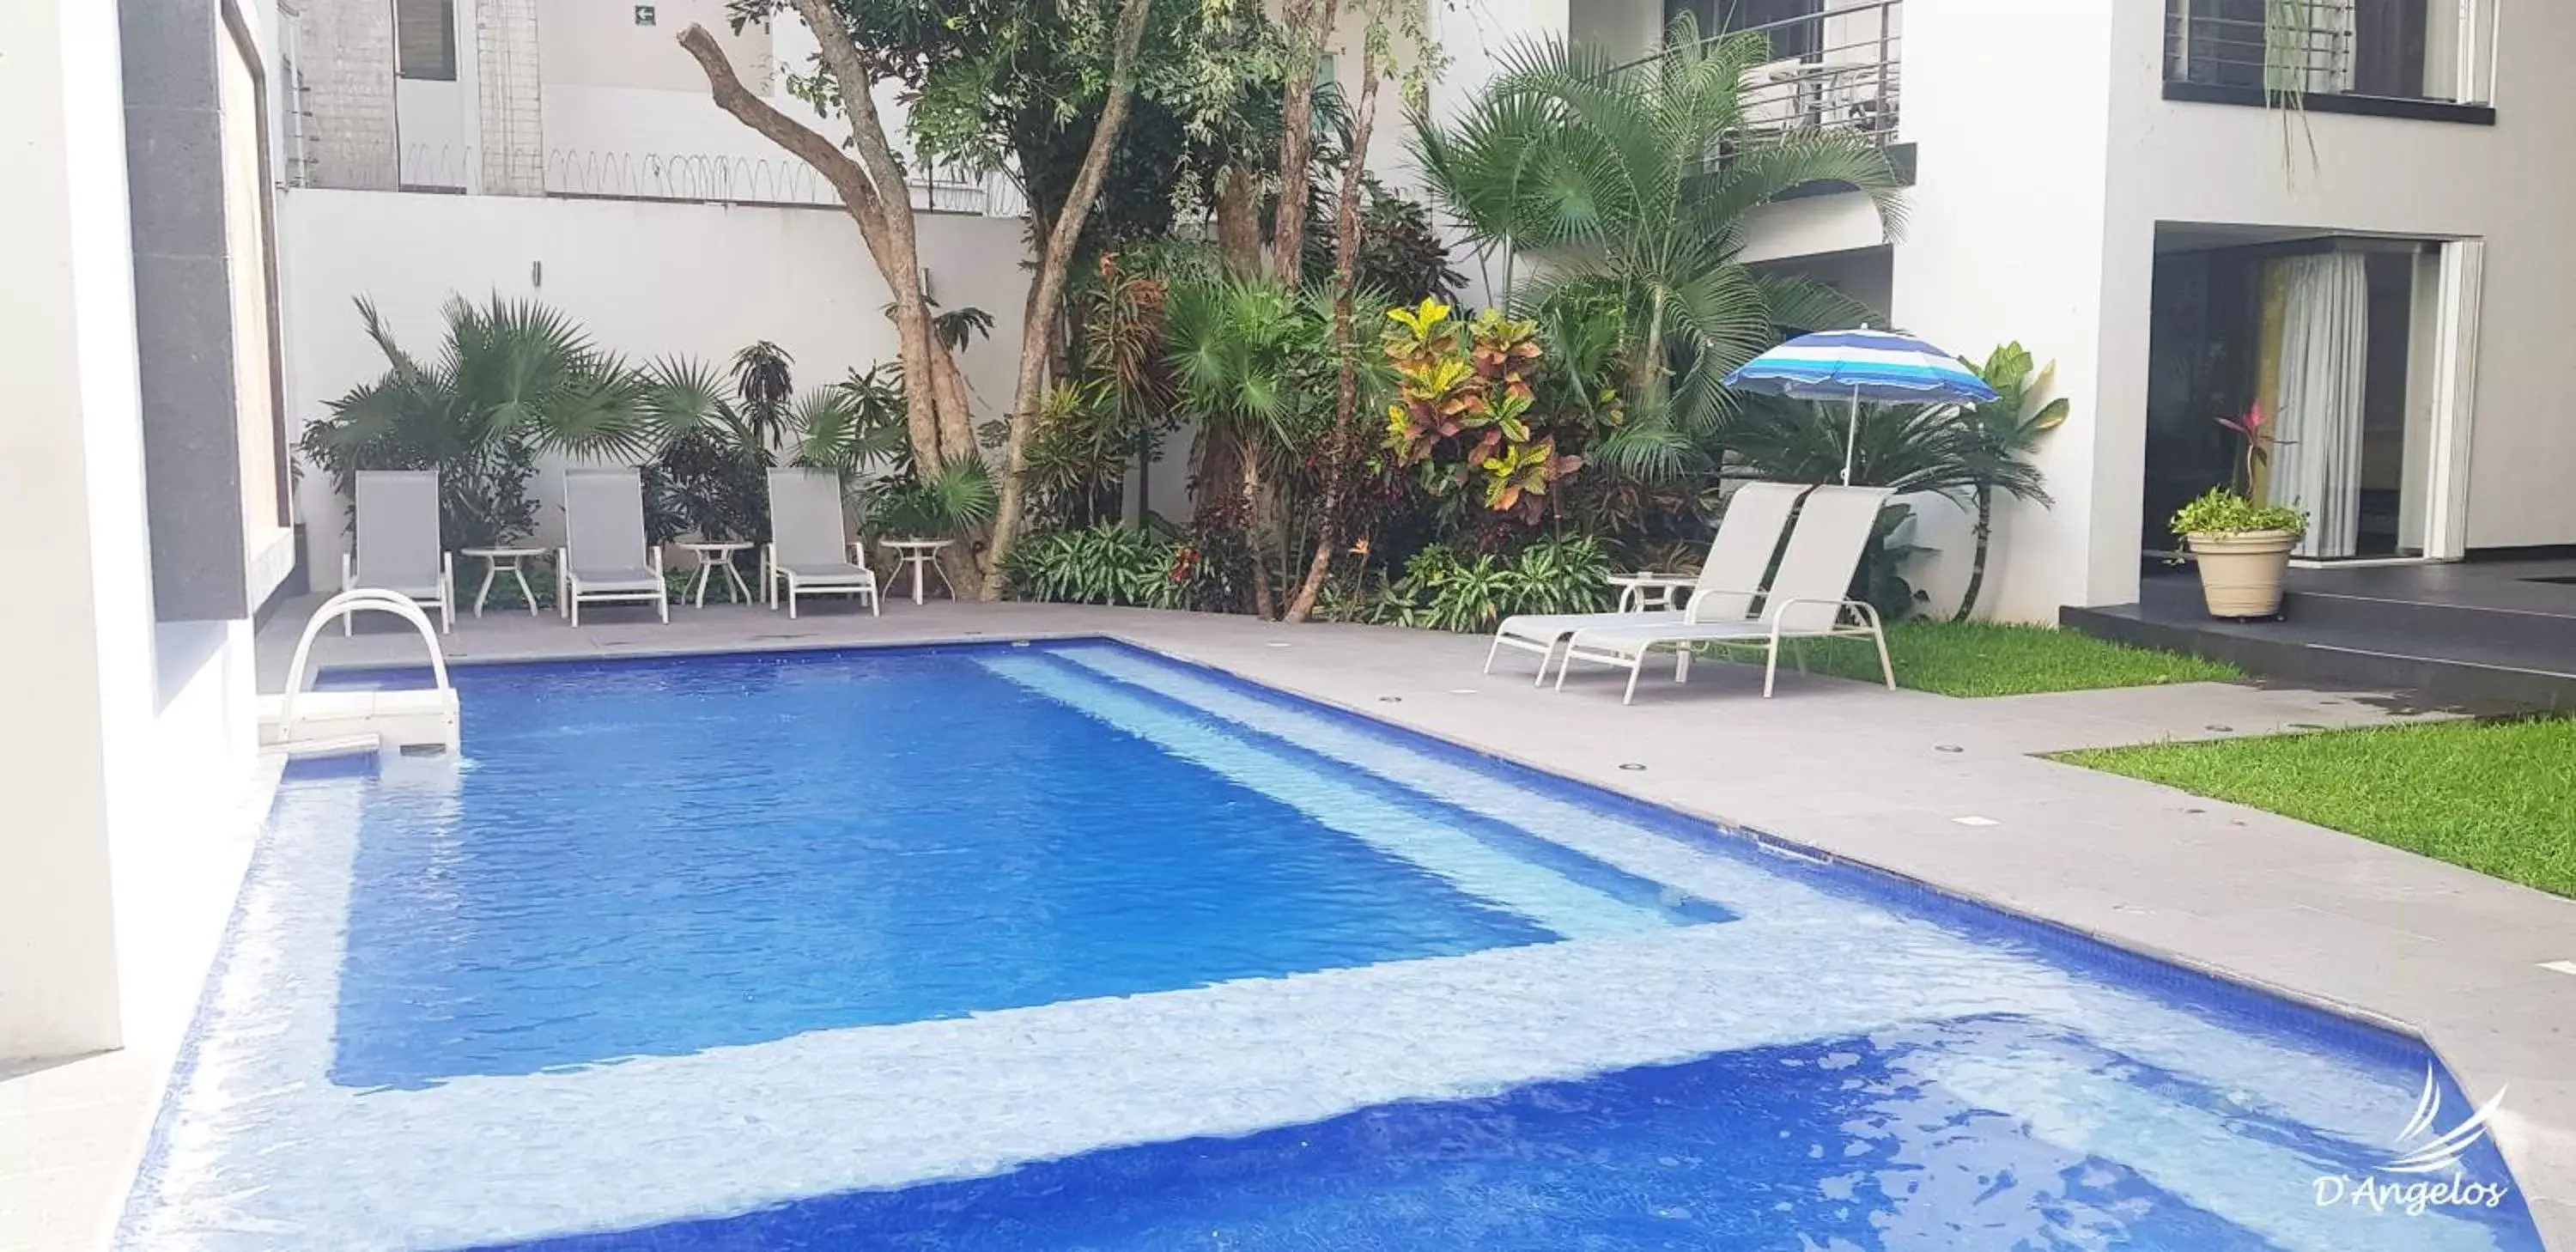 Swimming Pool in Dangelos Hotel on Fifth Avenue